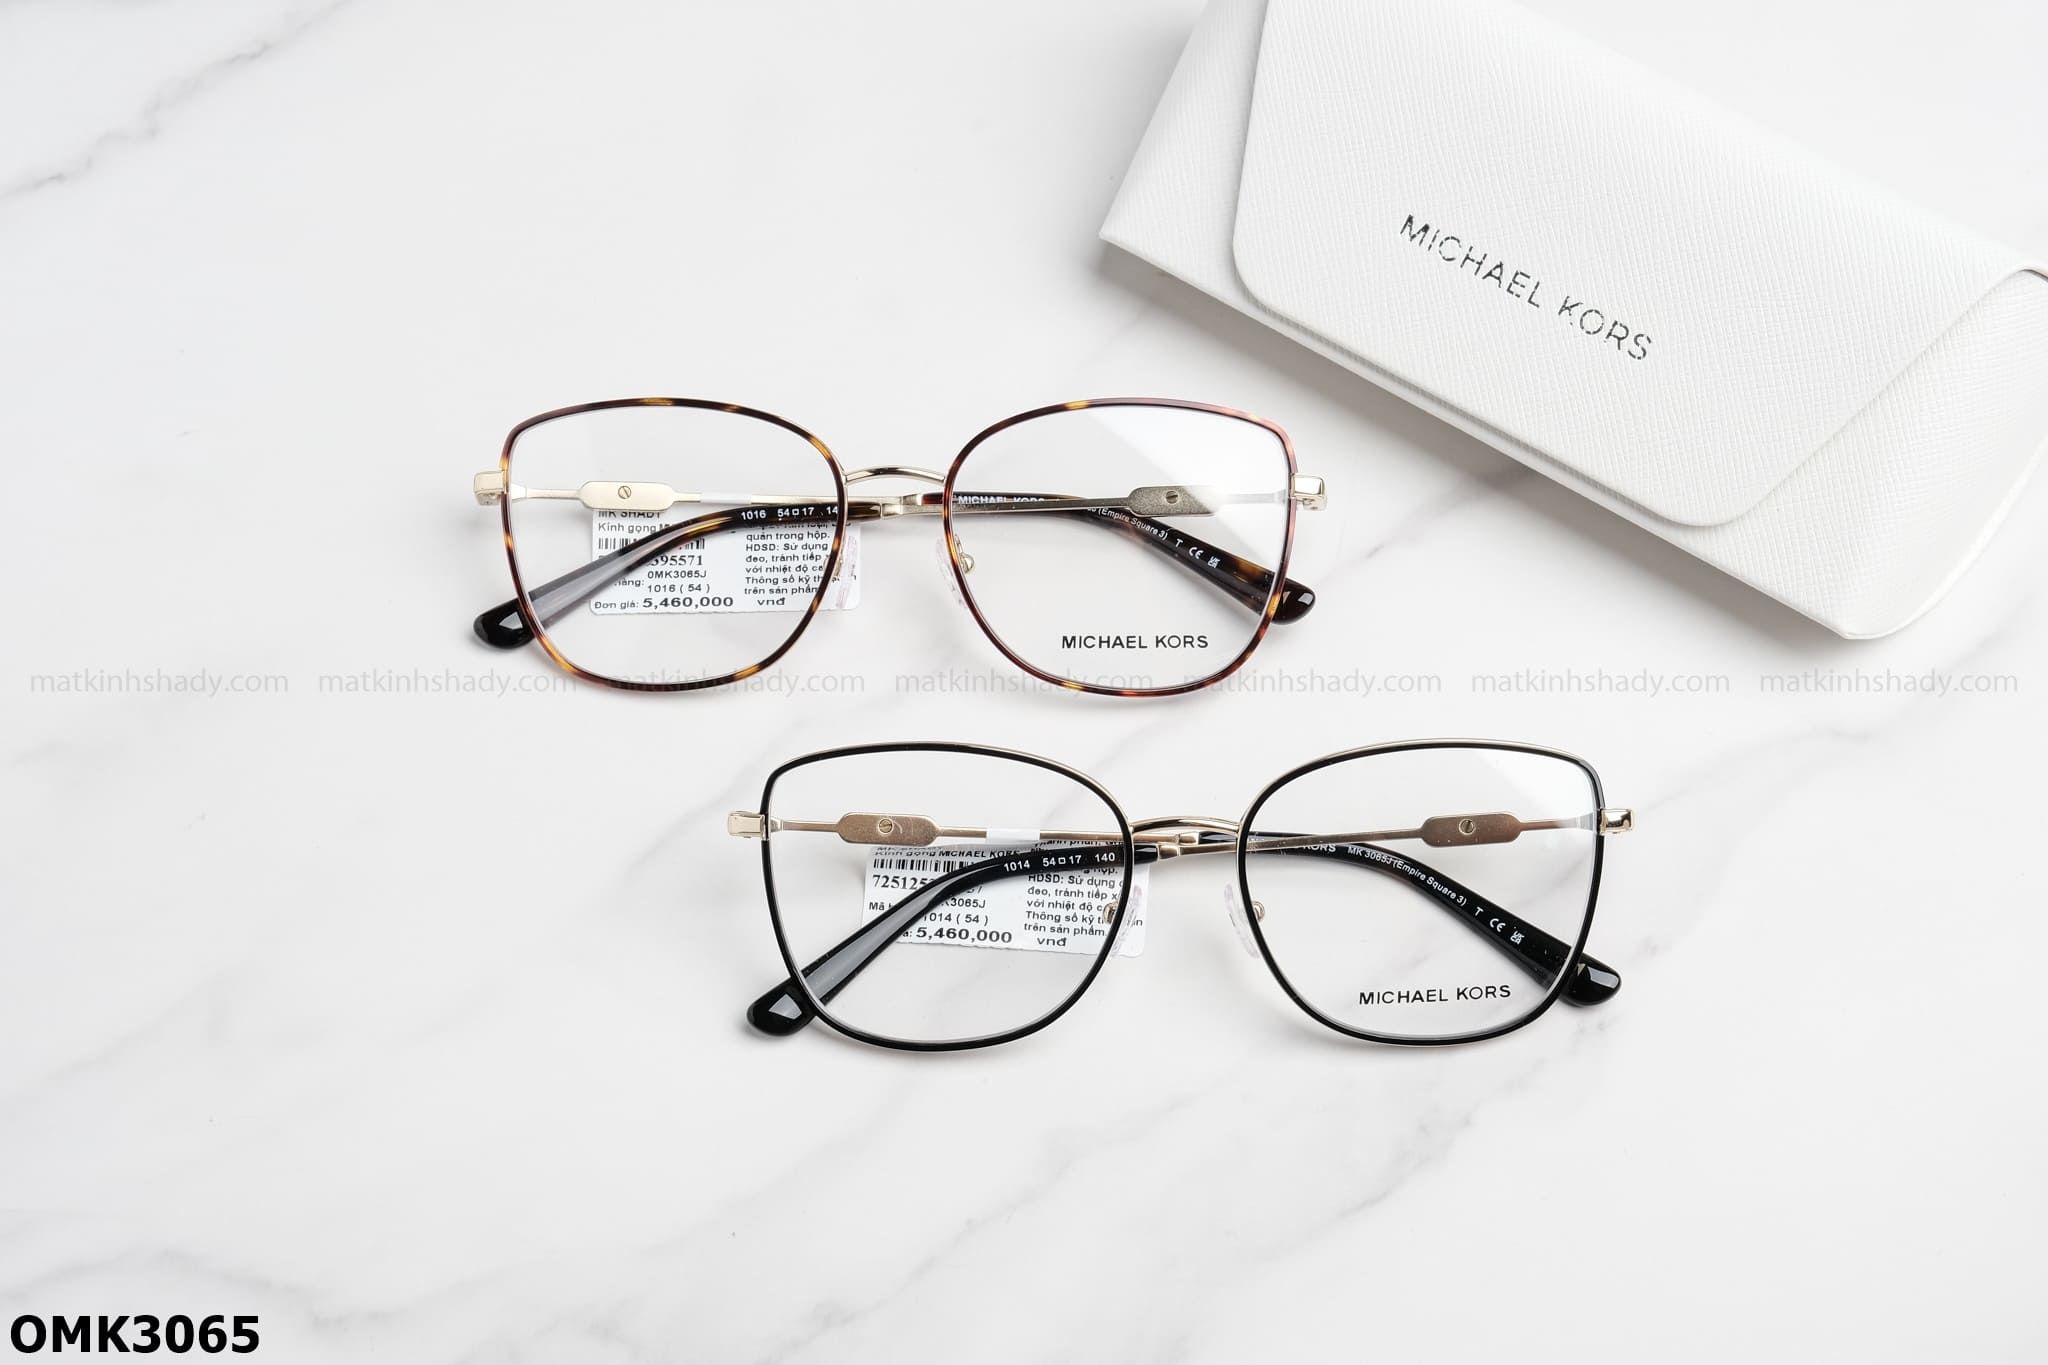  Michael Kors Eyewear - Glasses - OMK3065 